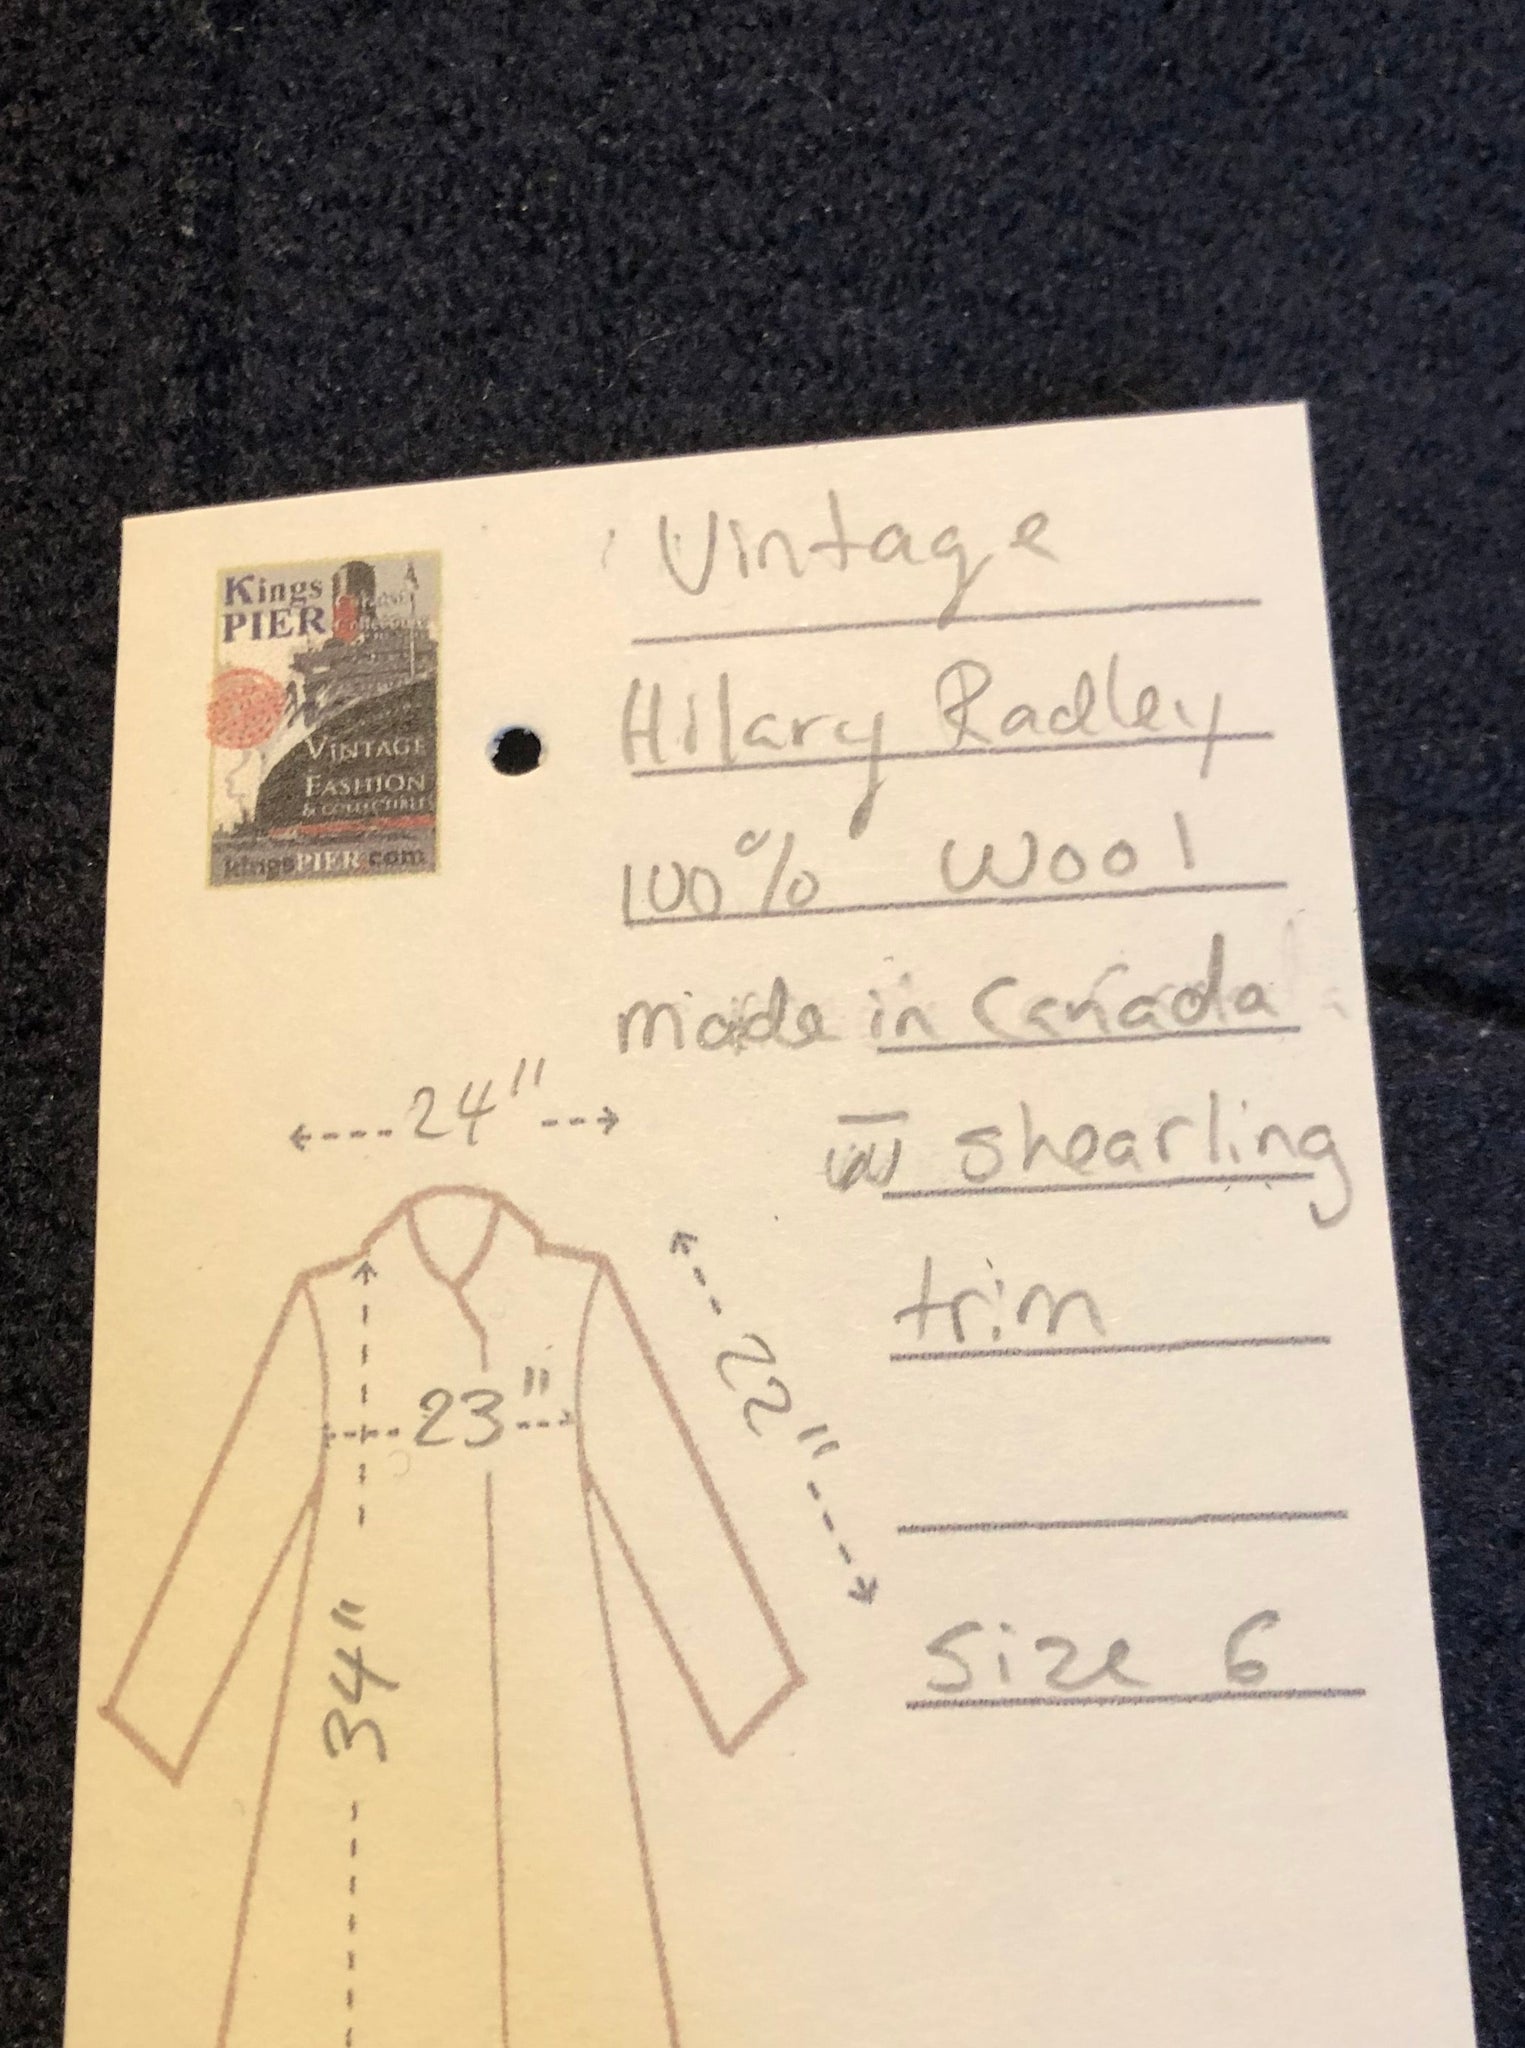 Hilary Radley, Jackets & Coats, Trench Coat Hillary Radley Beige Size 2